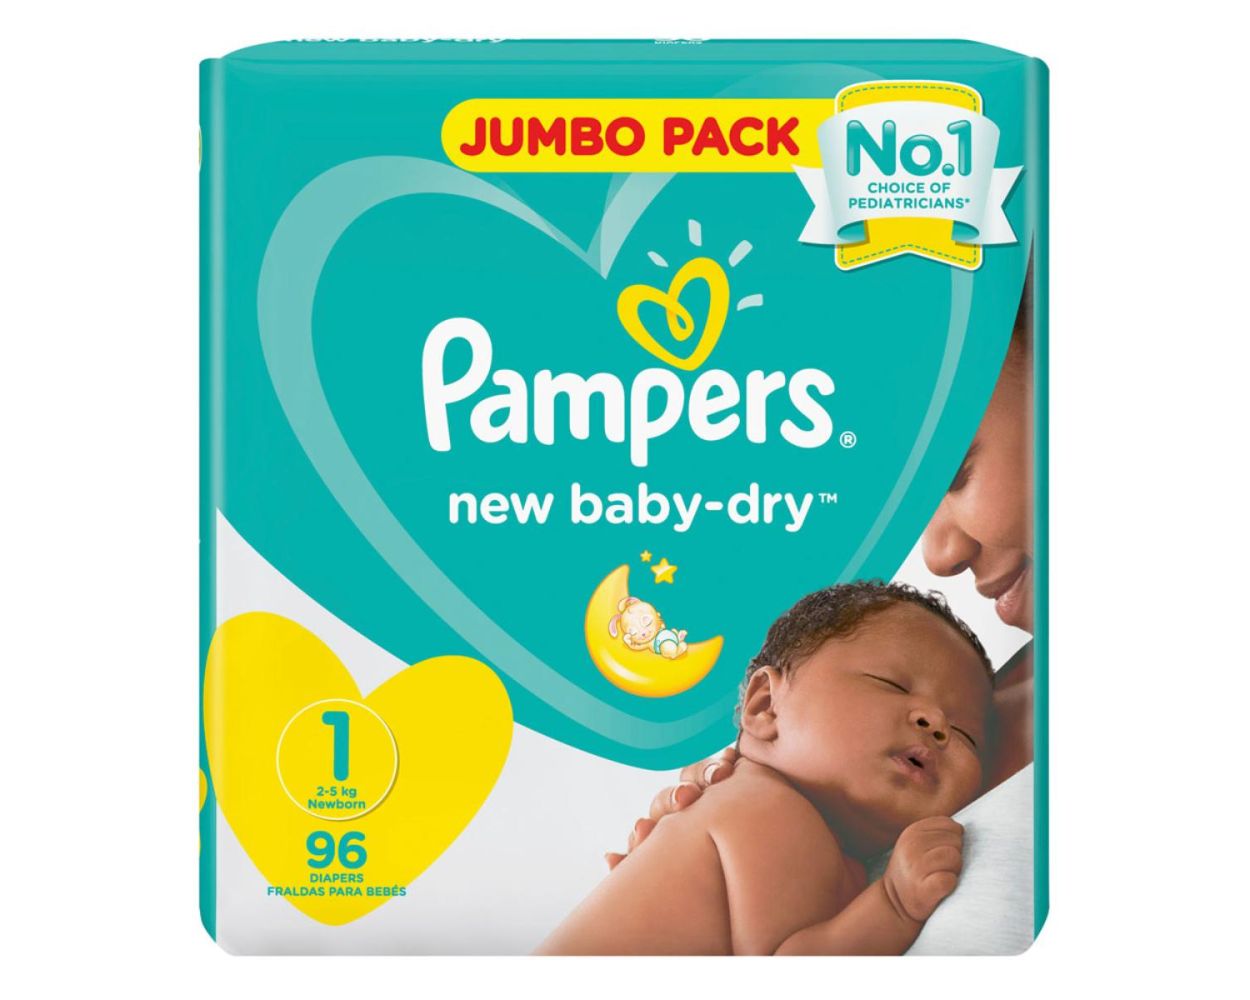 pampers active baby dry newborn